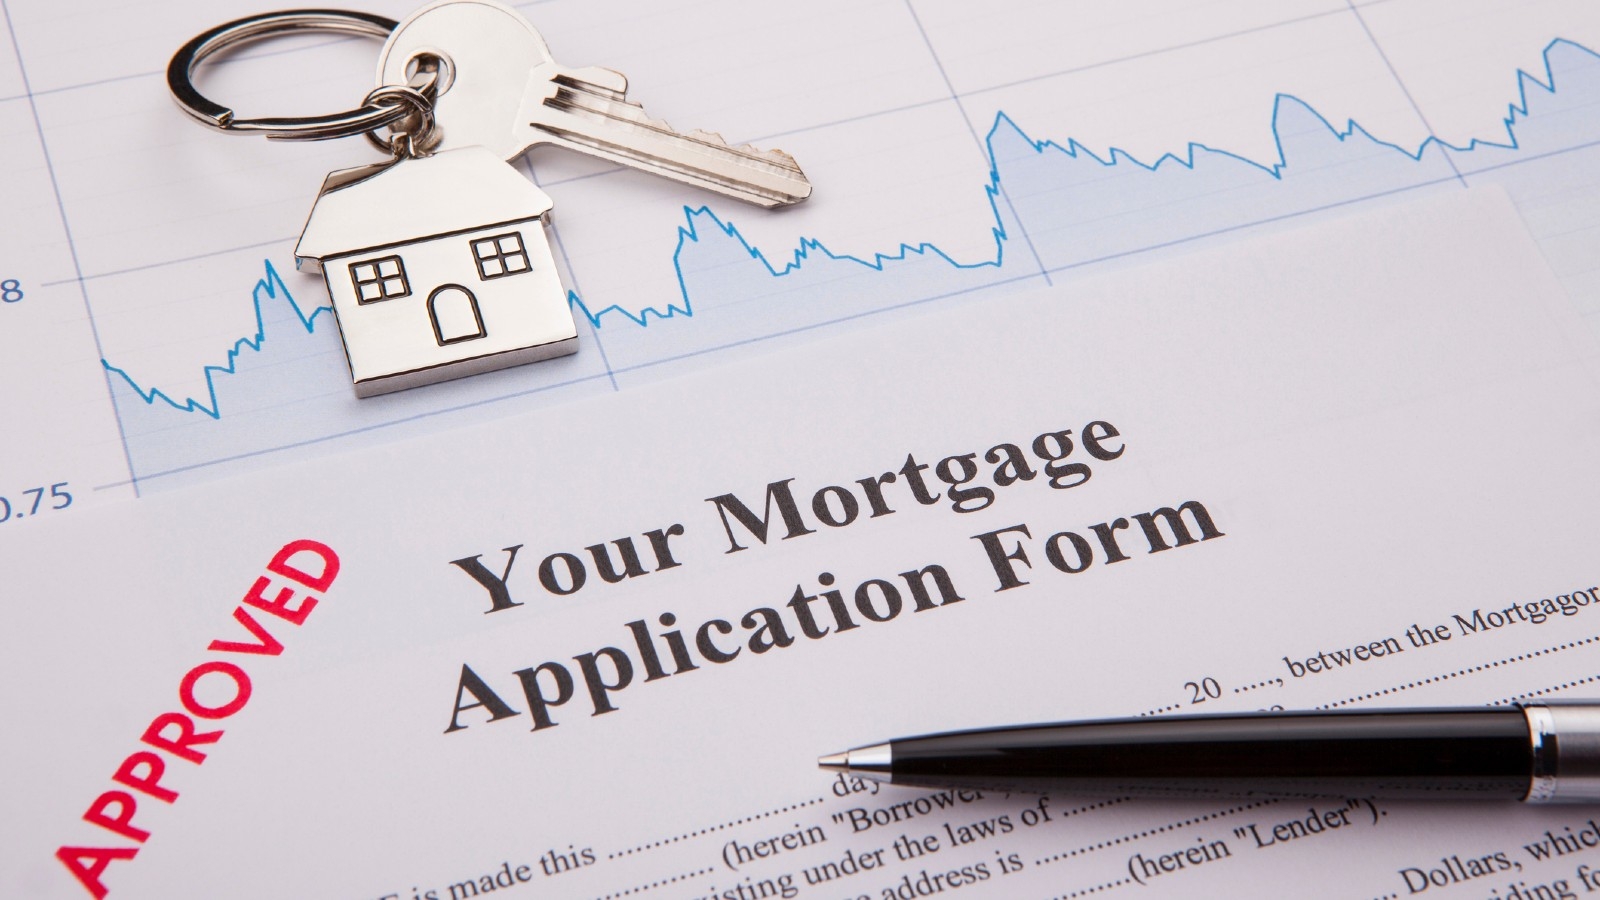 Mortgage application form. 